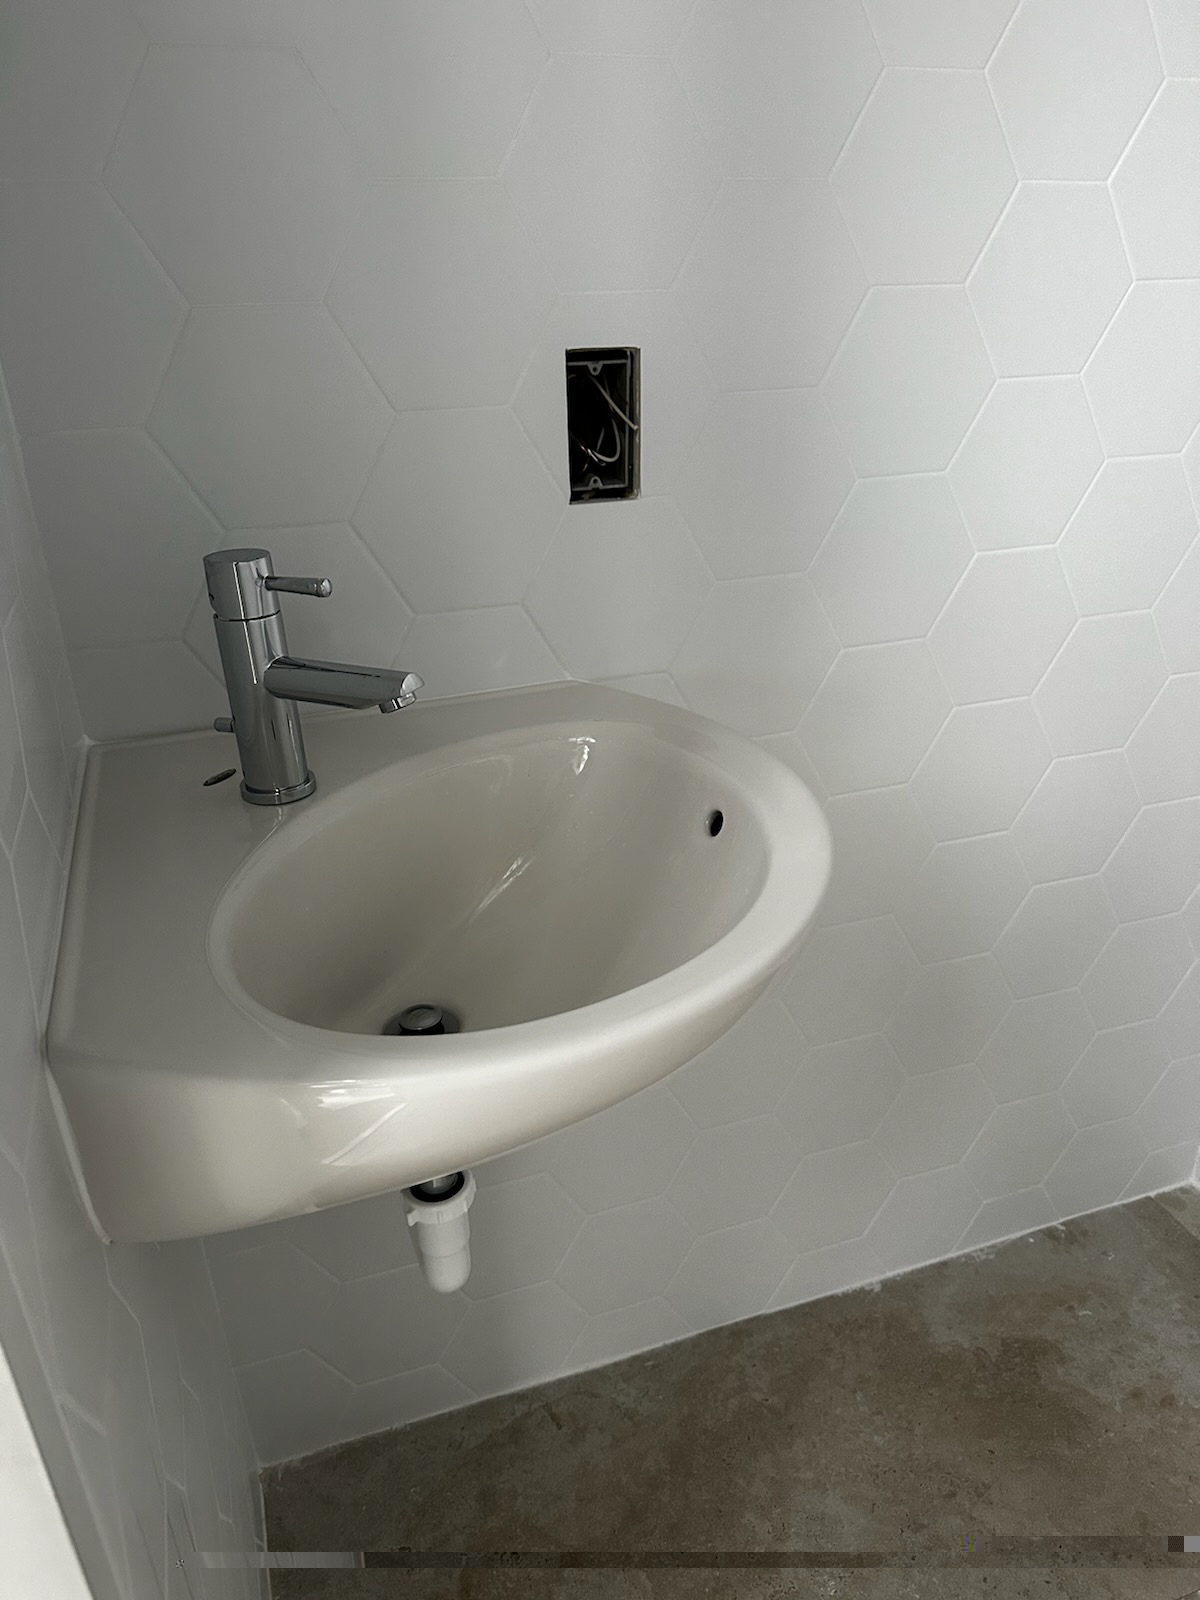 Bathroom Sink Installation in Kendall - Latest Jobs -  Miami 305 Plumbing